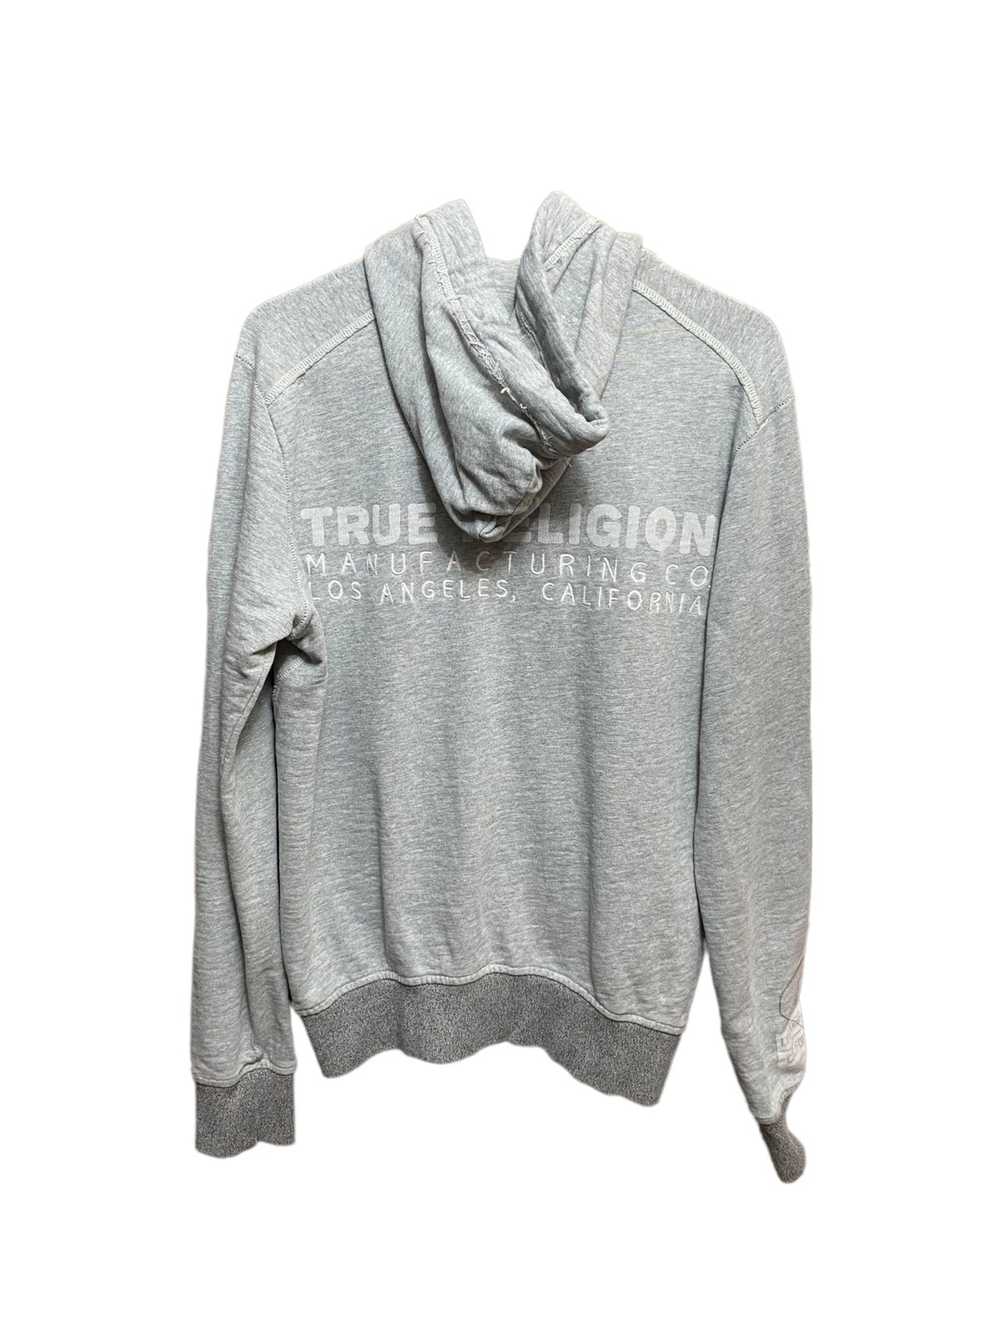 True Religion True Religion gray zip hoodie, size… - image 5